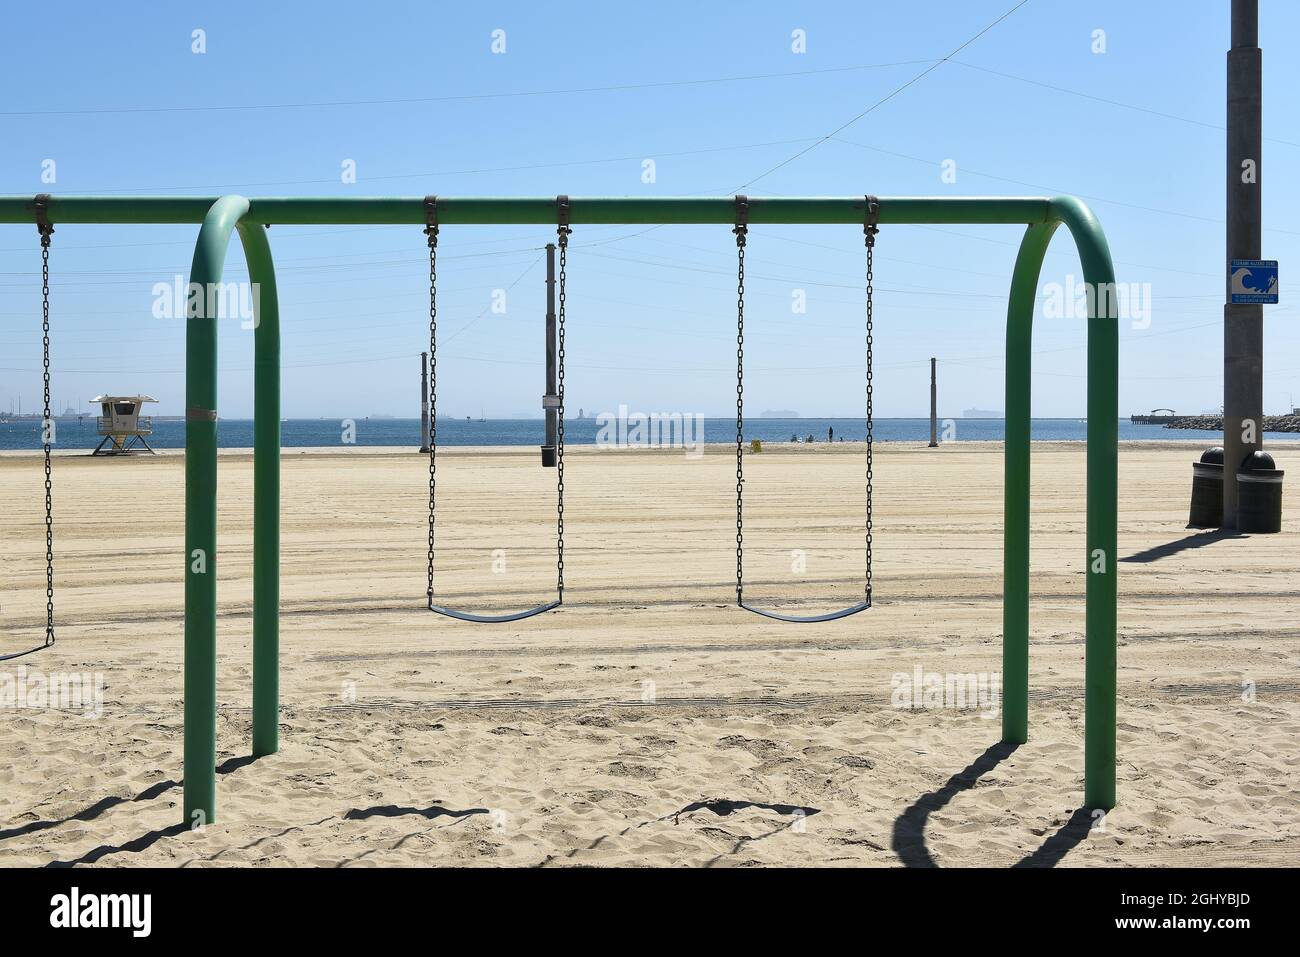 SAN PEDRO, CALIFORNIA - 27 AUG 2021: Swing Set in a sand  playground at Cabrillo Beach Stock Photo